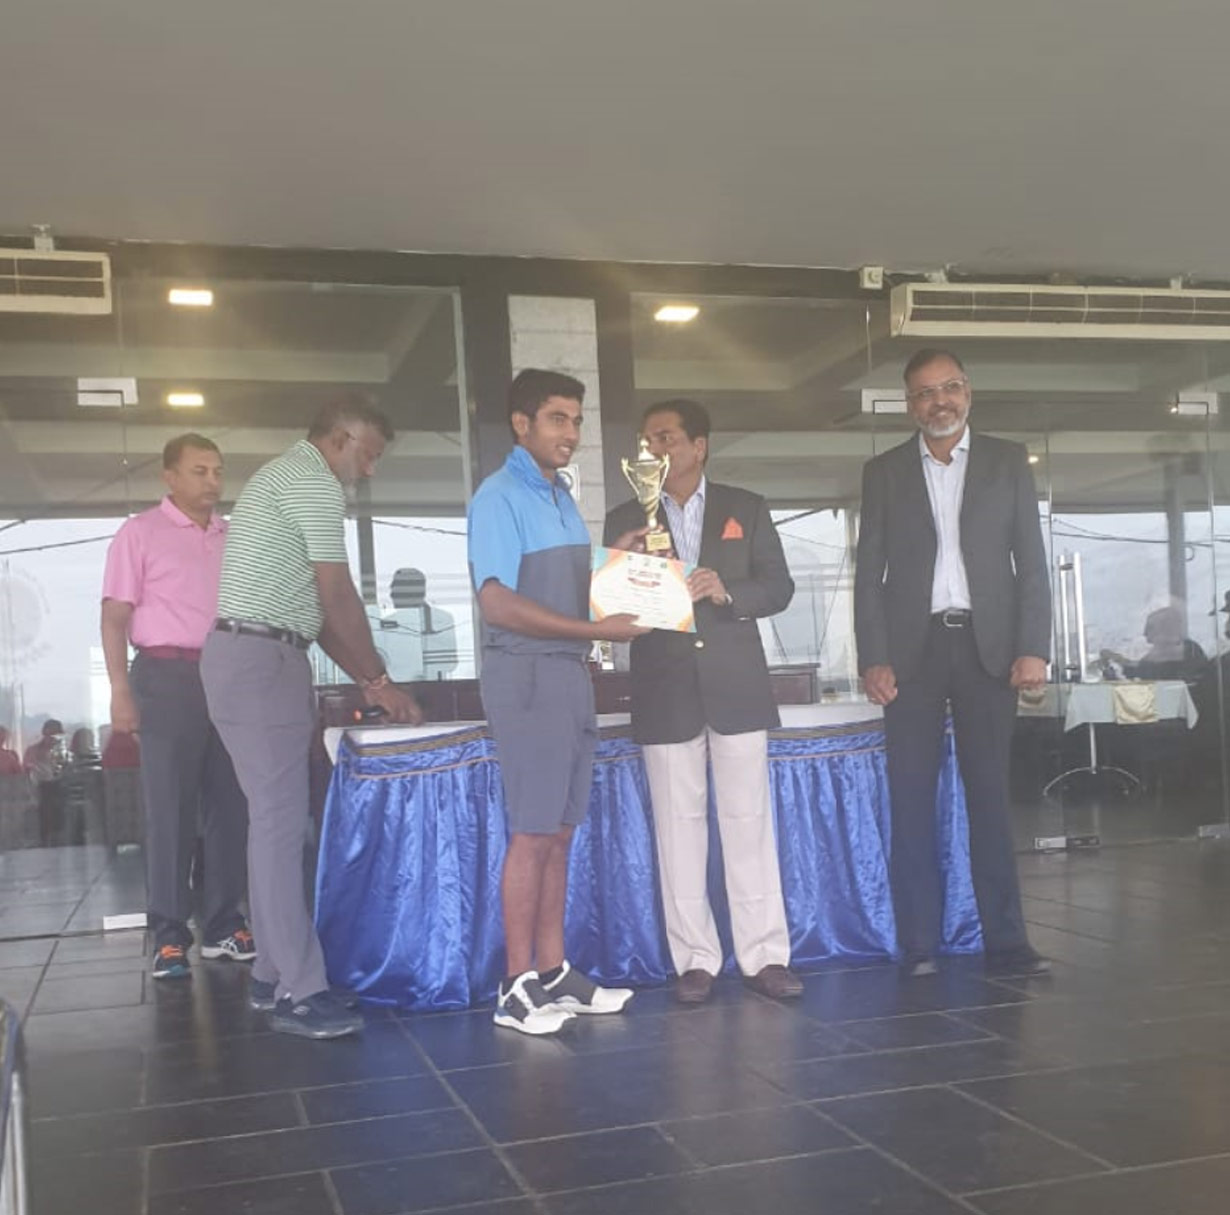 Aaditya Natekar – Winner Category A (Boys)